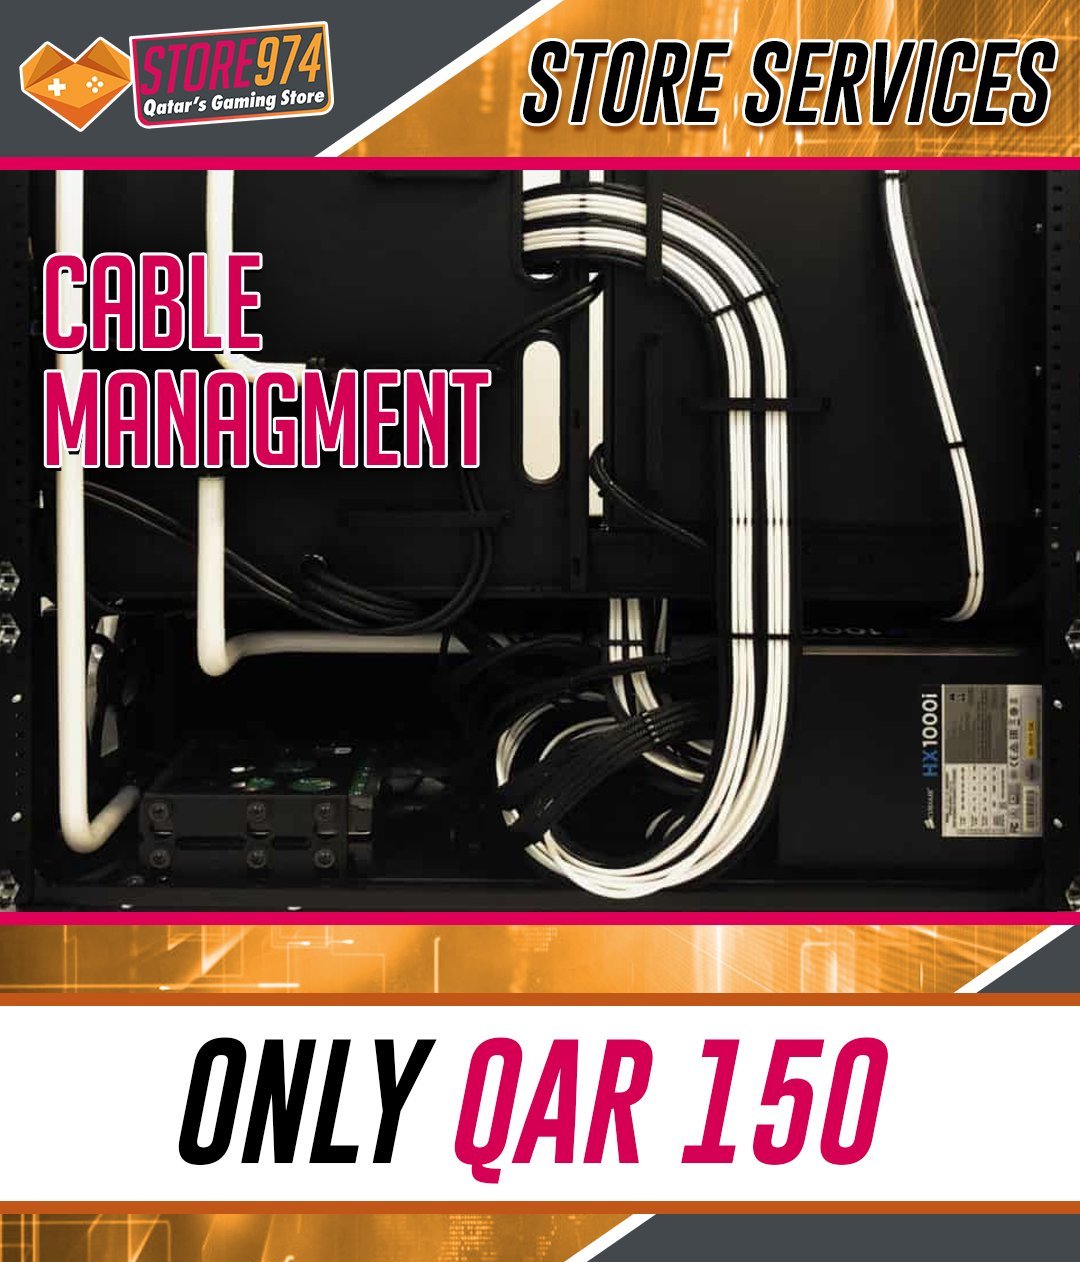 Cable Management Service - Store 974 | ستور ٩٧٤